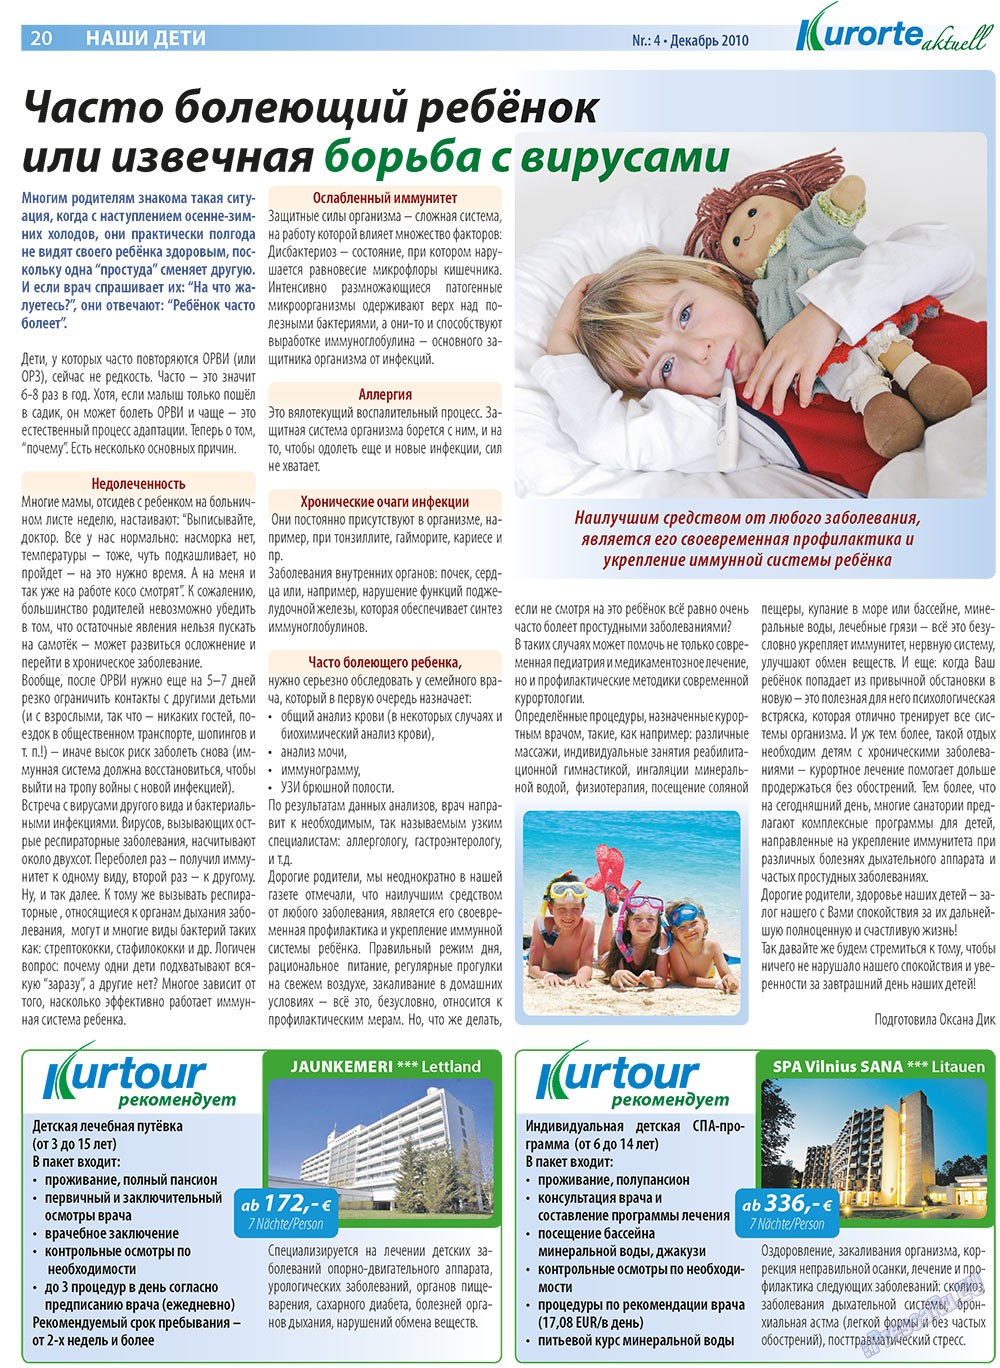 Kurorte aktuell, газета. 2010 №4 стр.20